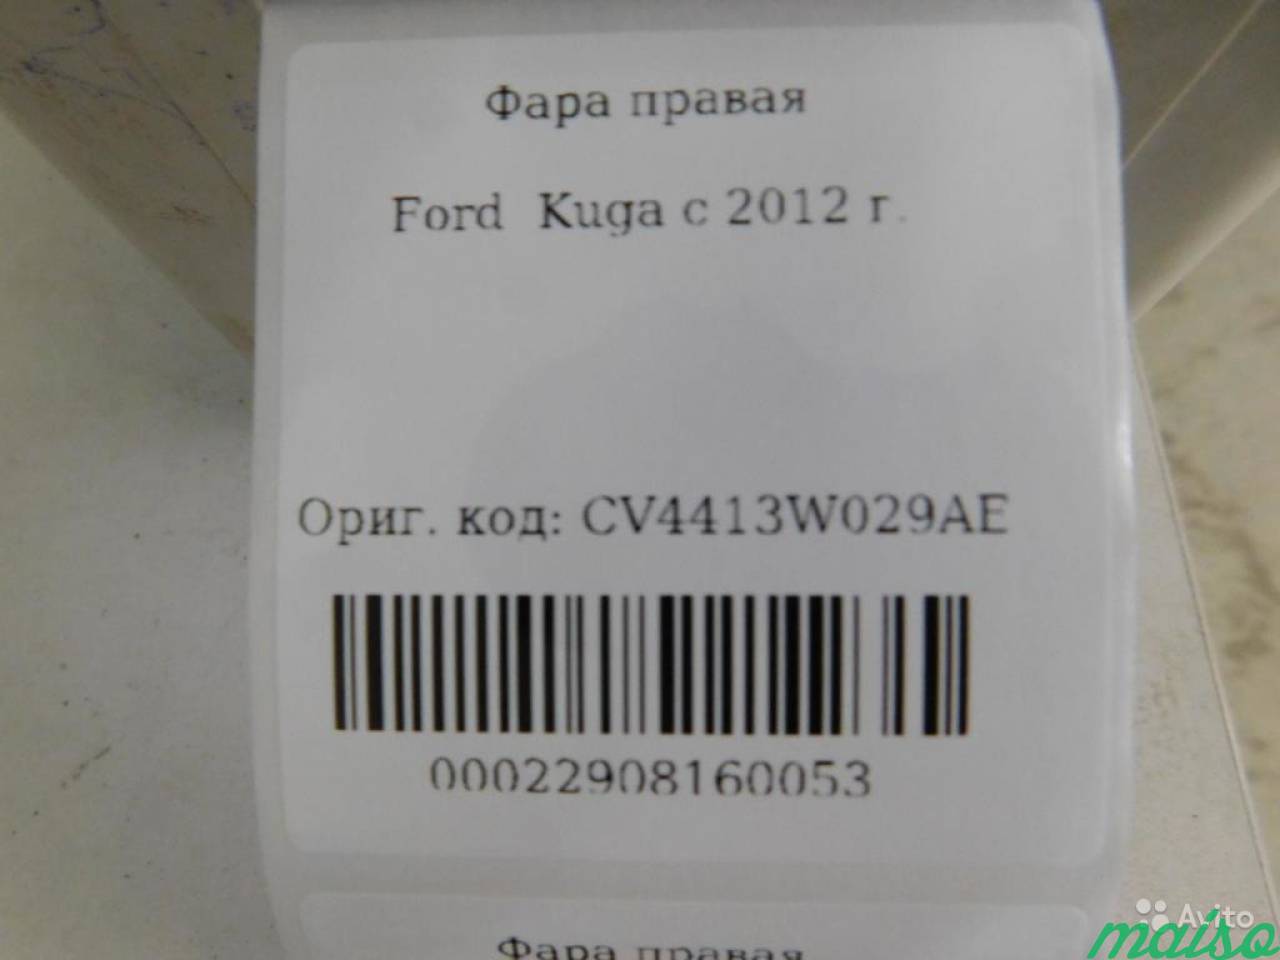 Фара правая Ford Kuga c 2012 в Санкт-Петербурге. Фото 4